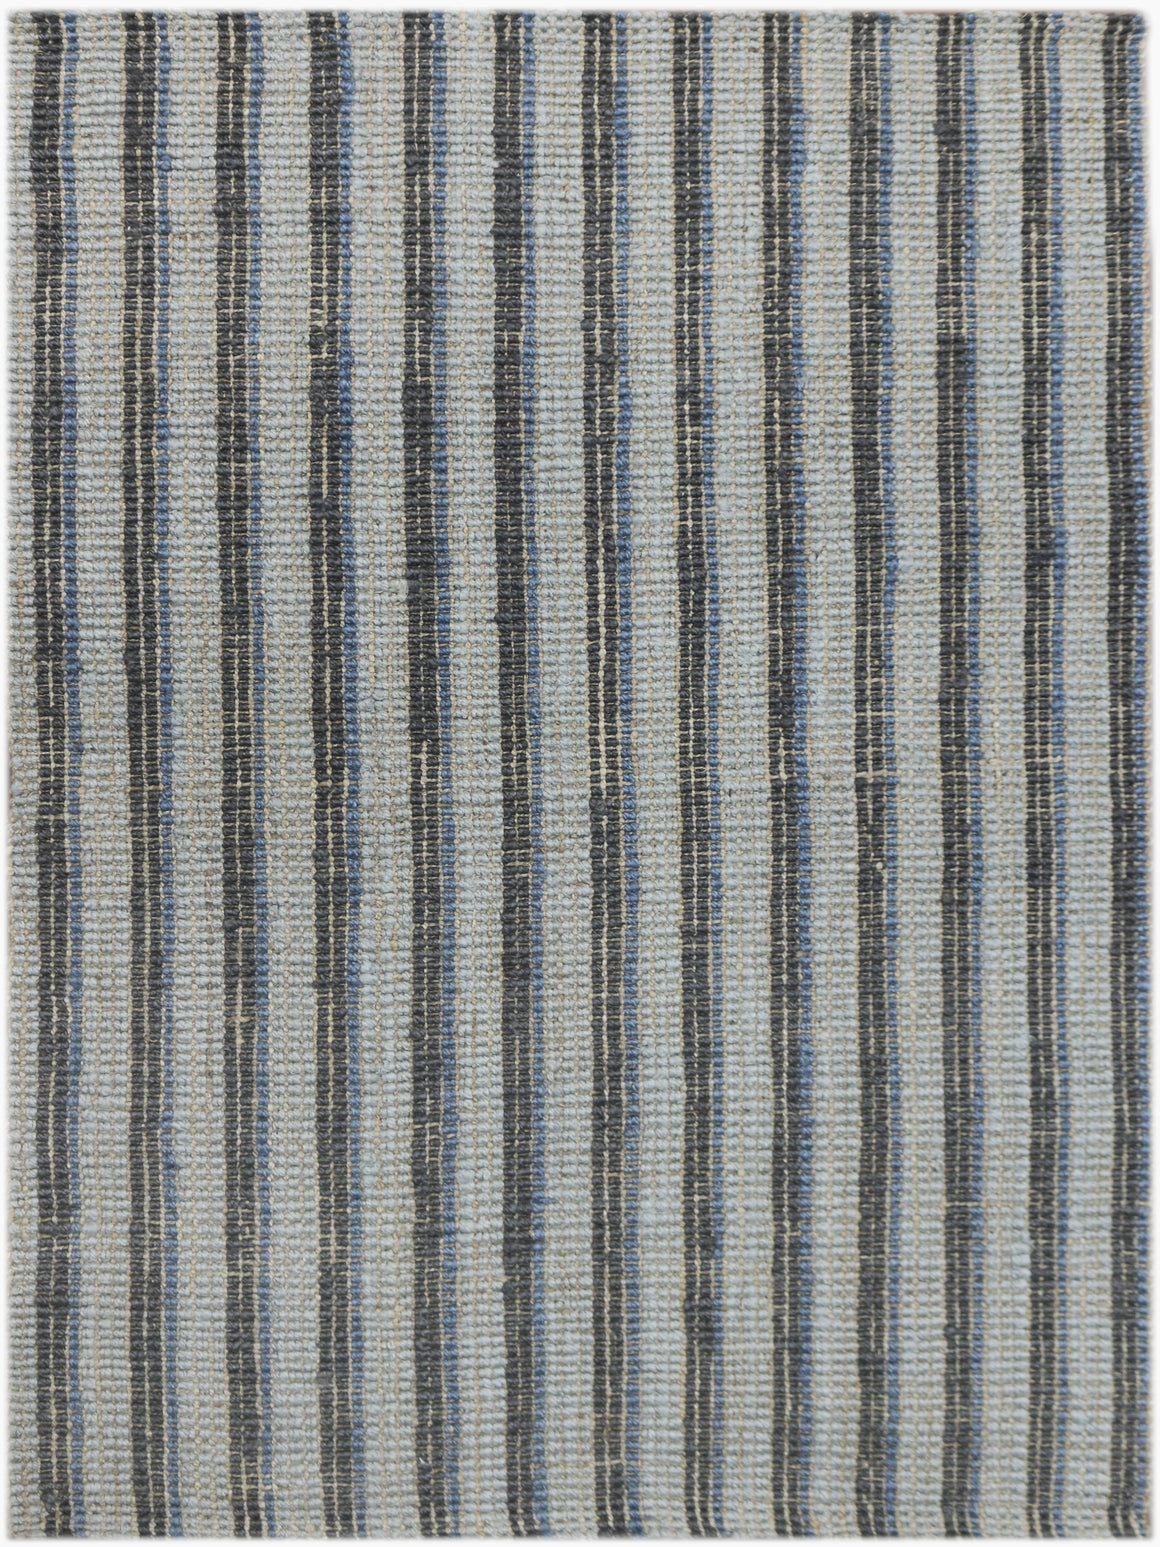 Tropics Striped Blue Hand-Woven Rug 8'x10'